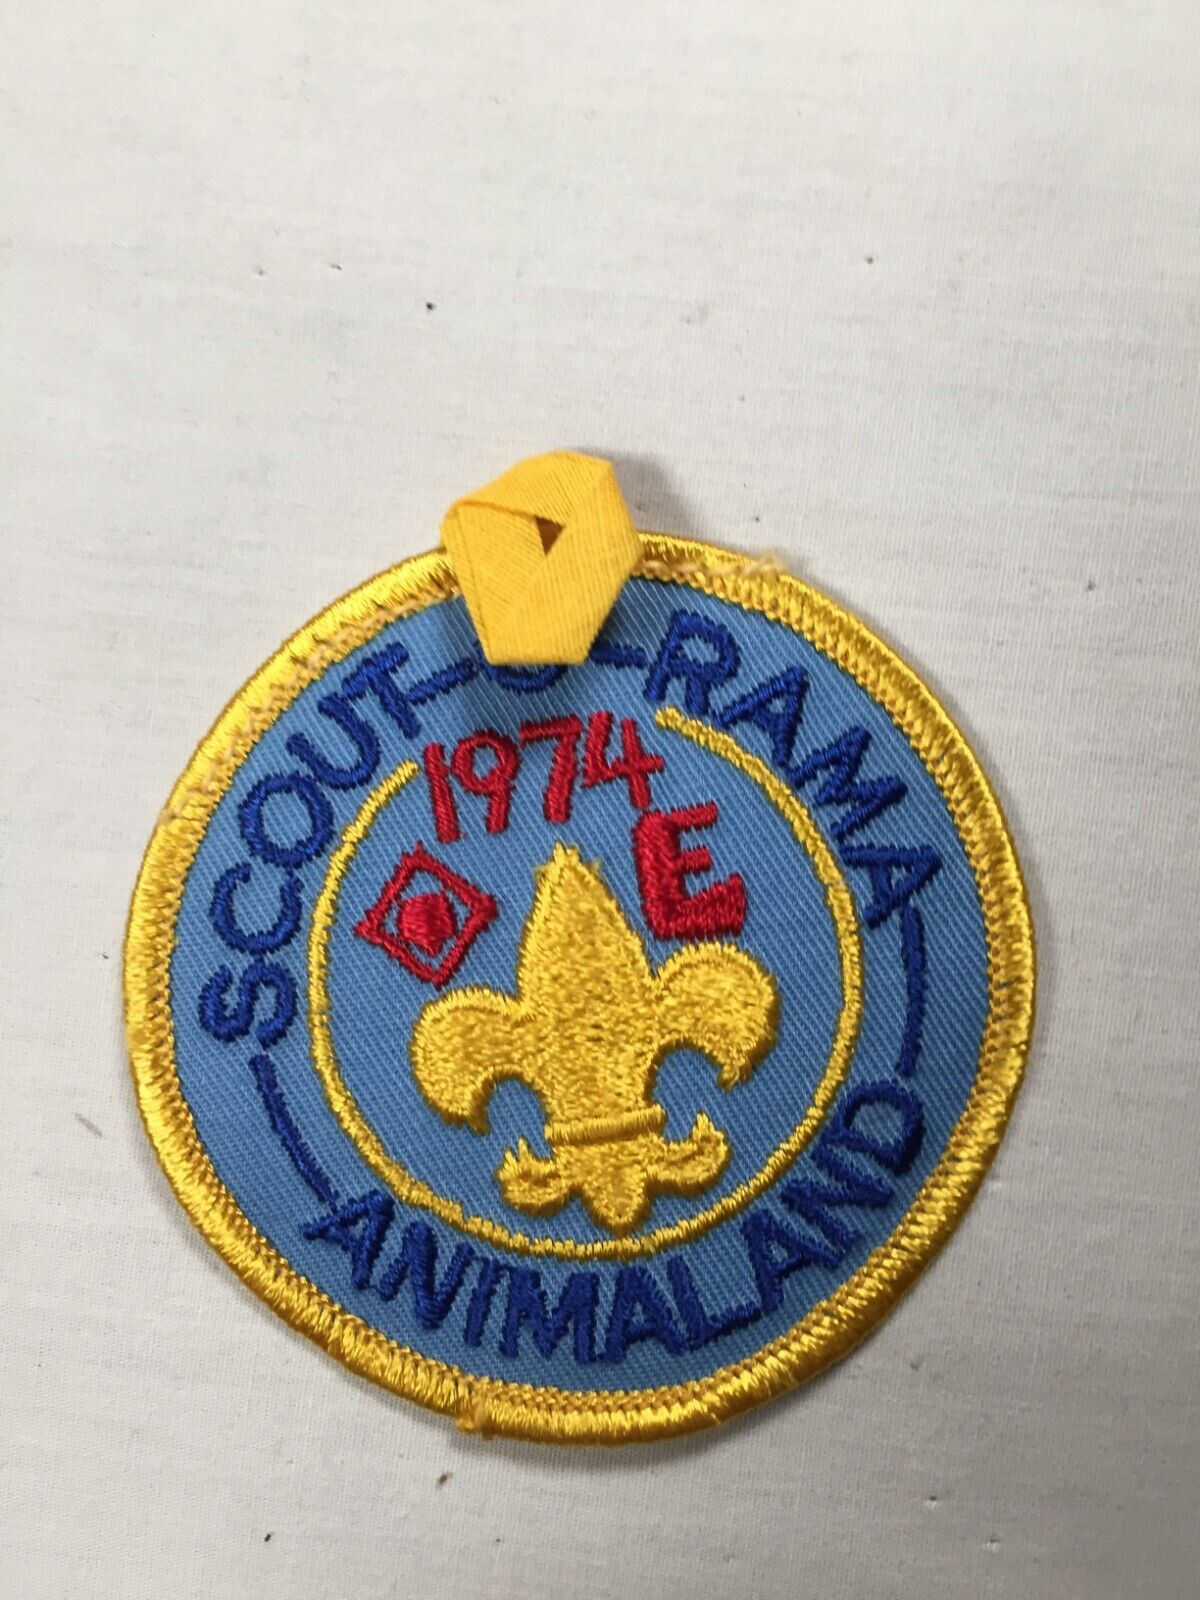 1974 Animaland district Scoutorama BSA Activity Patch